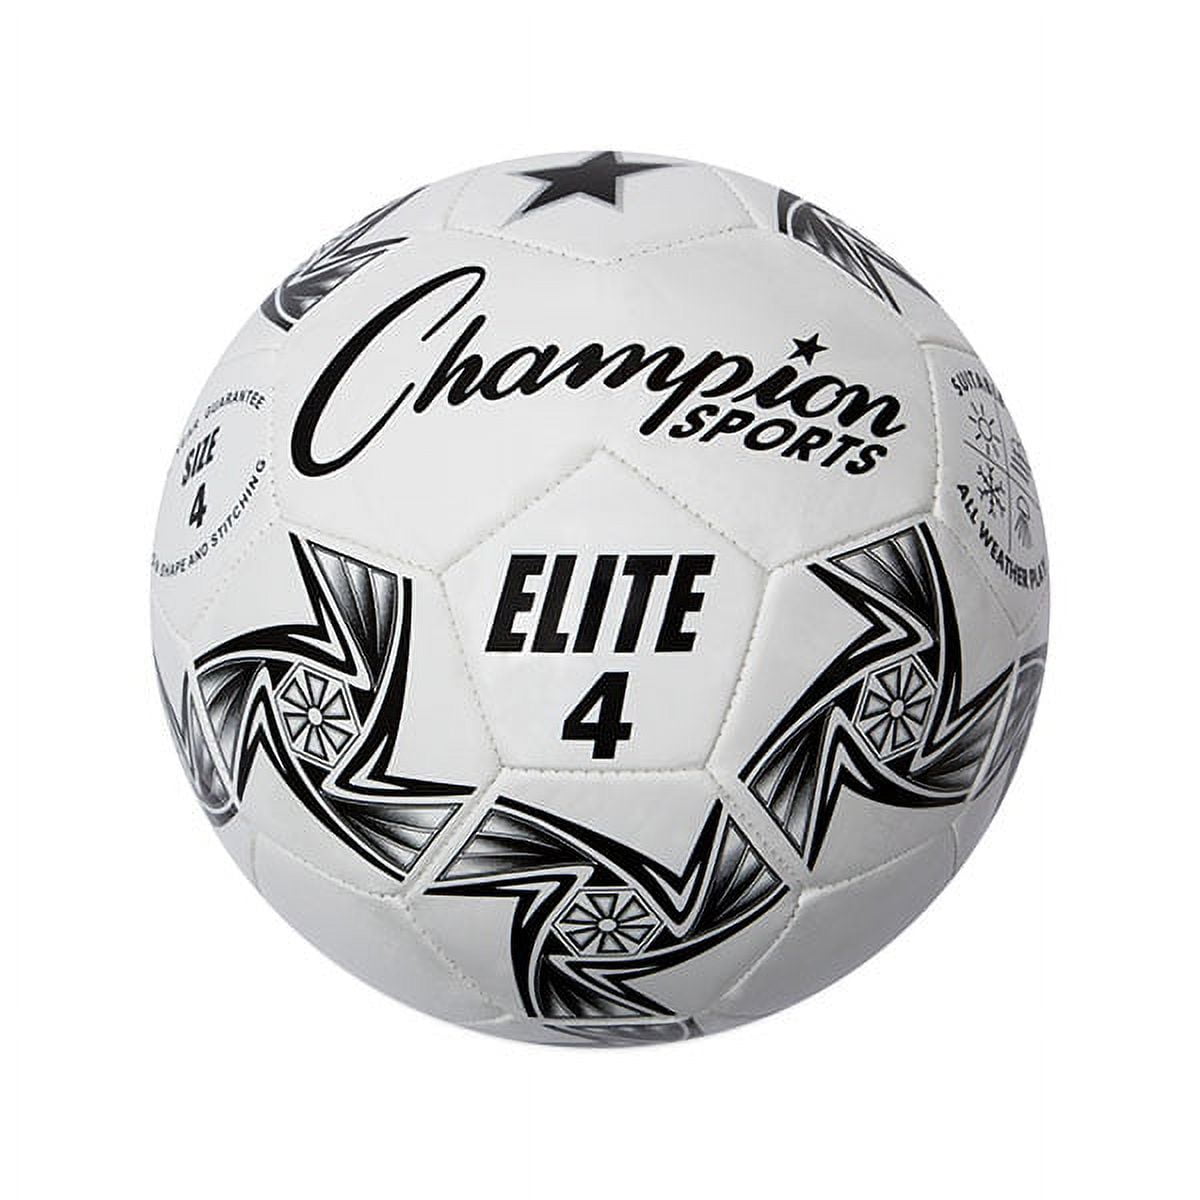 Picture of Champion Sports ELITE4 Elite Soccer Ball, White & Black - Size 4